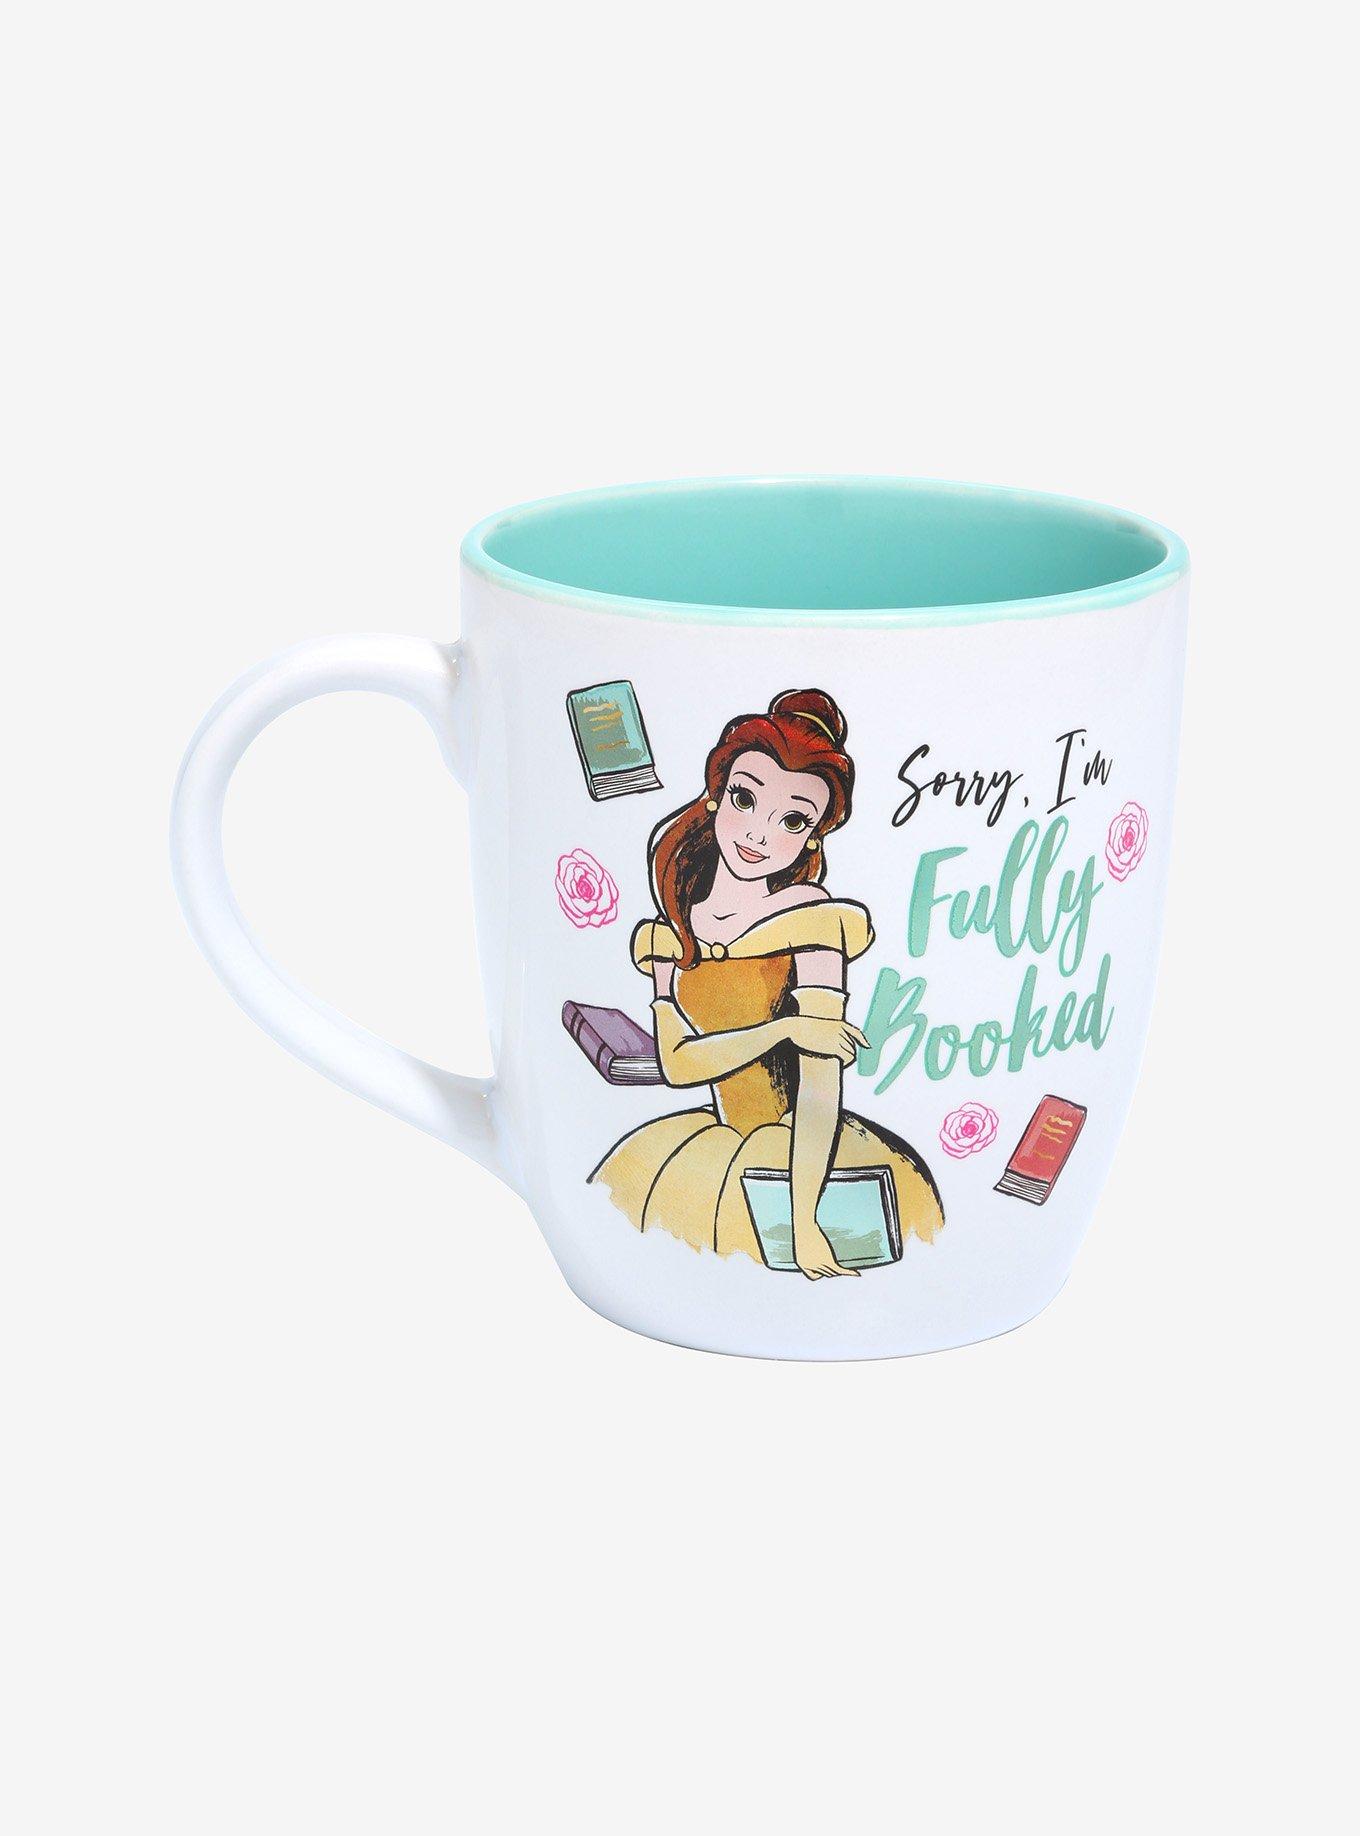 Disney Stichs Valentine Cute Heart Chocolate Coffee Mug Gifts - Jolly  Family Gifts